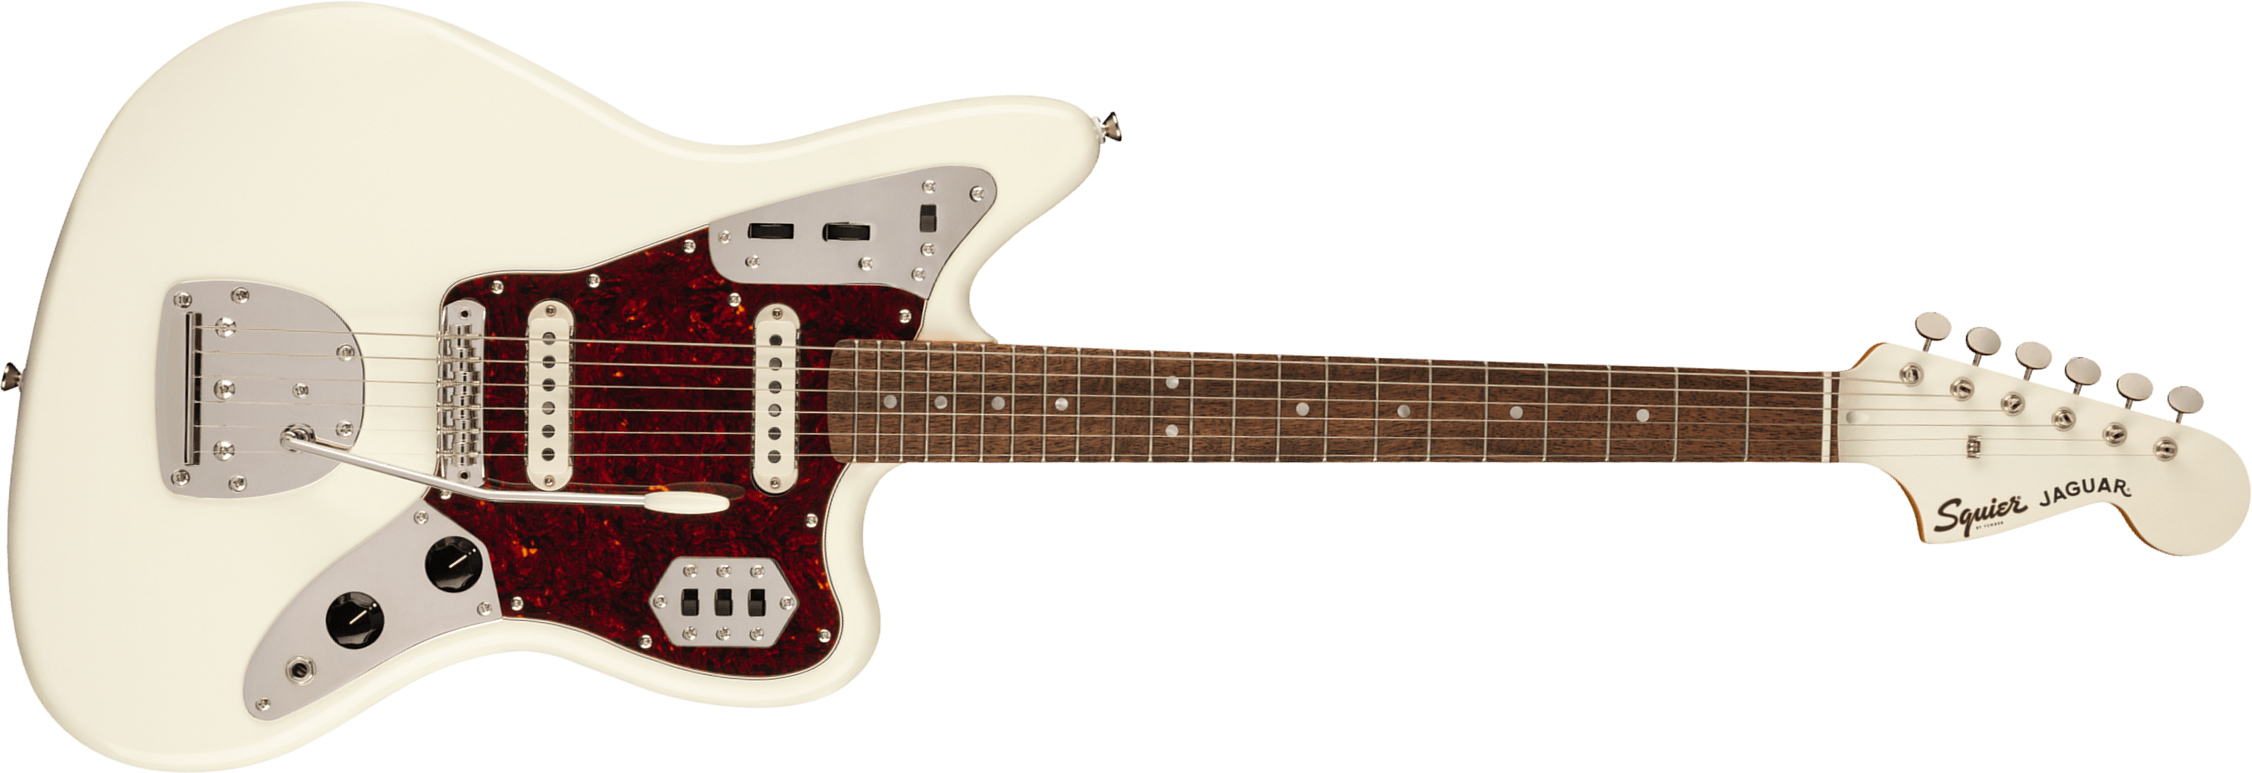 Squier Jaguar Classic Vibe 60s Fsr Ltd Lau - Olympic White With Matching Headstock - Retro-rock elektrische gitaar - Main picture